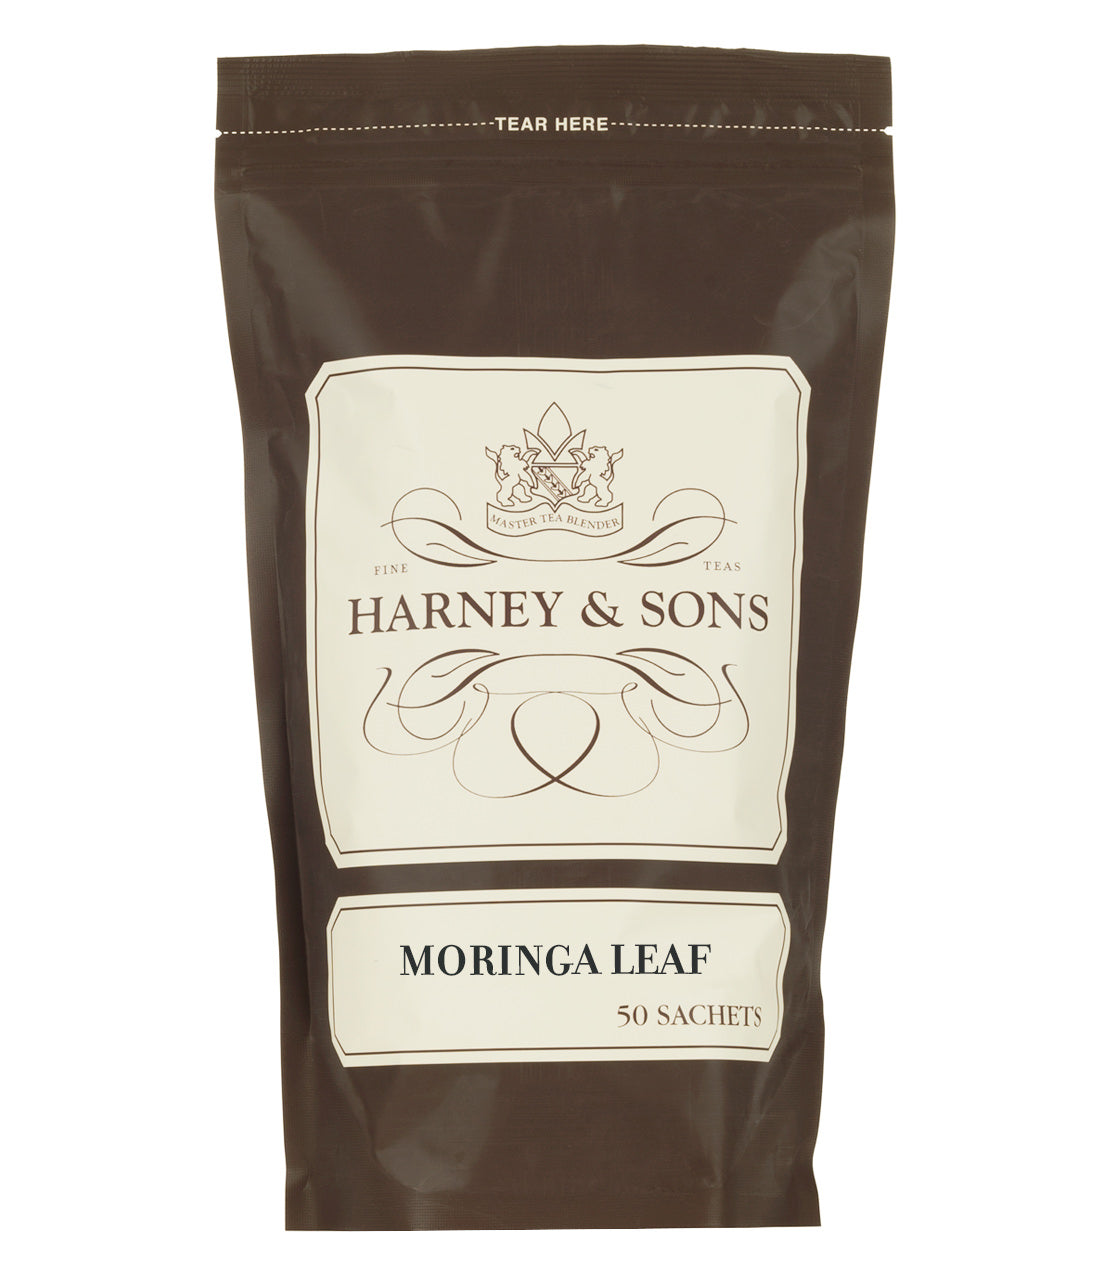 Moringa Leaf - Sachets Bag of 50 Sachets - Harney & Sons Fine Teas